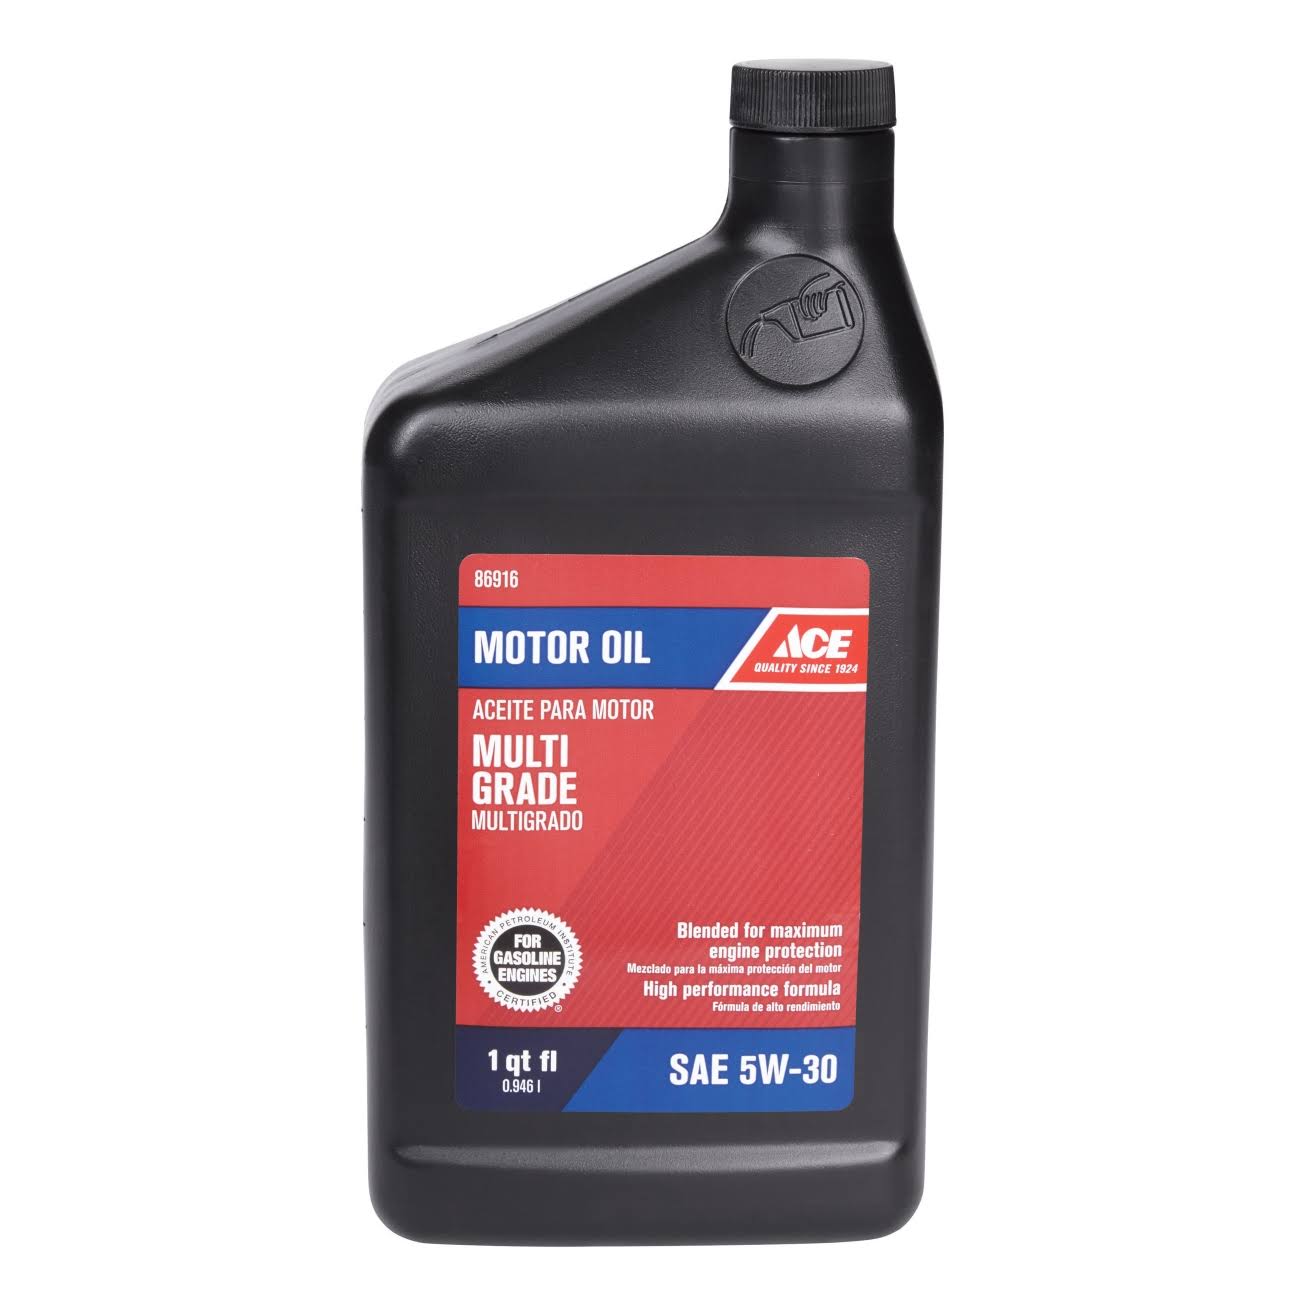 Ace Oil Motor 5W30 qt